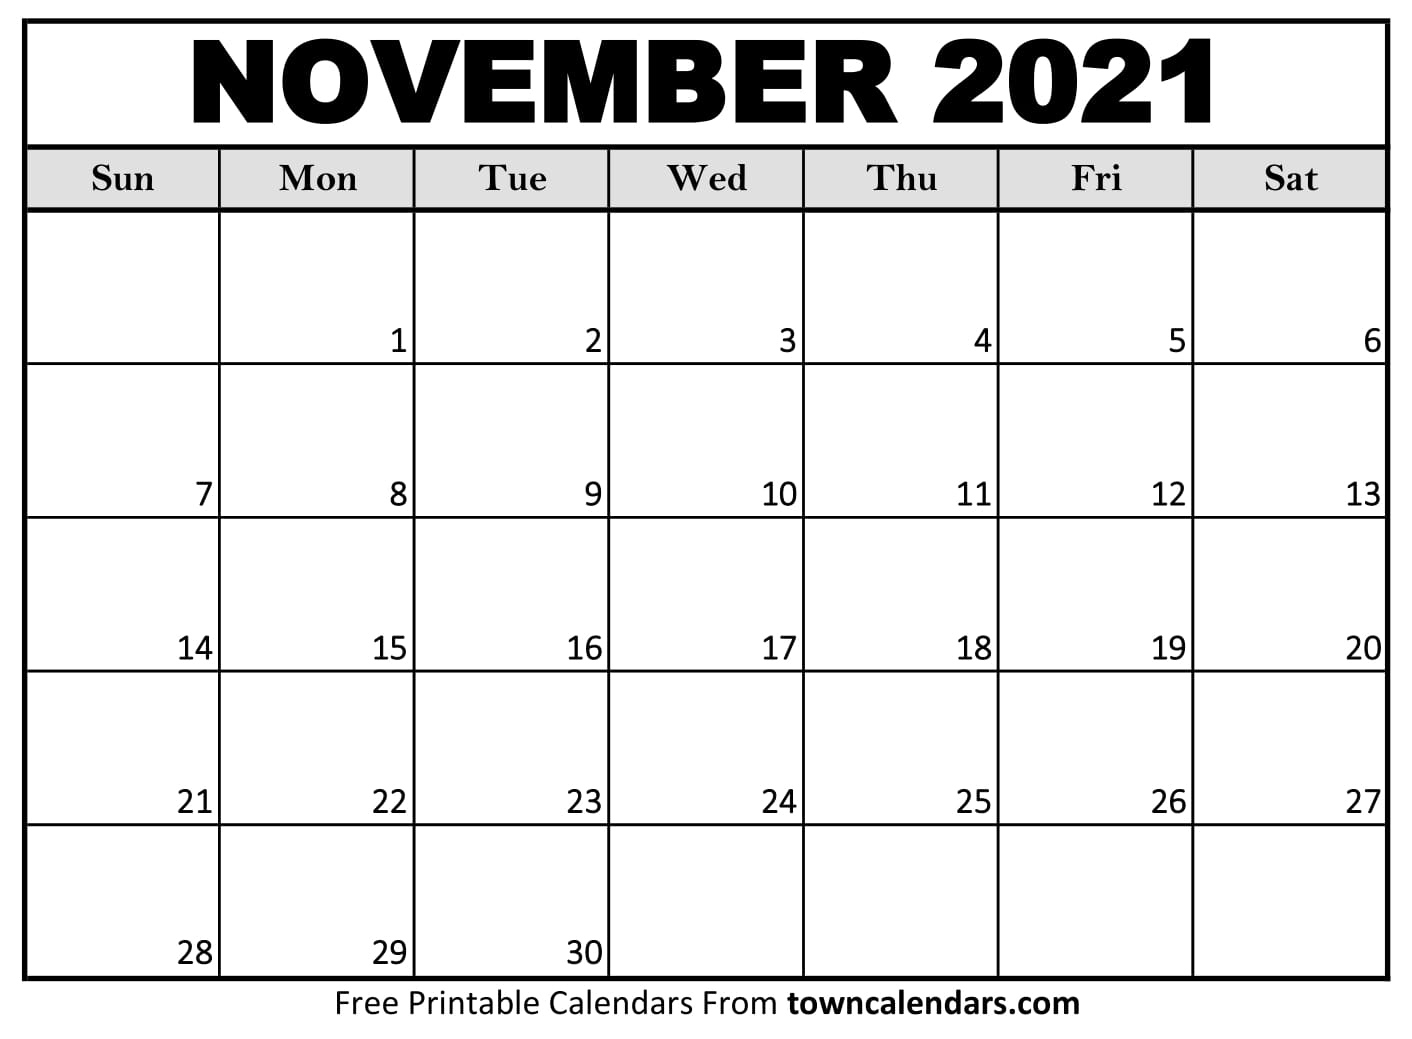 Printable November 2021 Calendar - Towncalendars November 2021 Calendar Printable